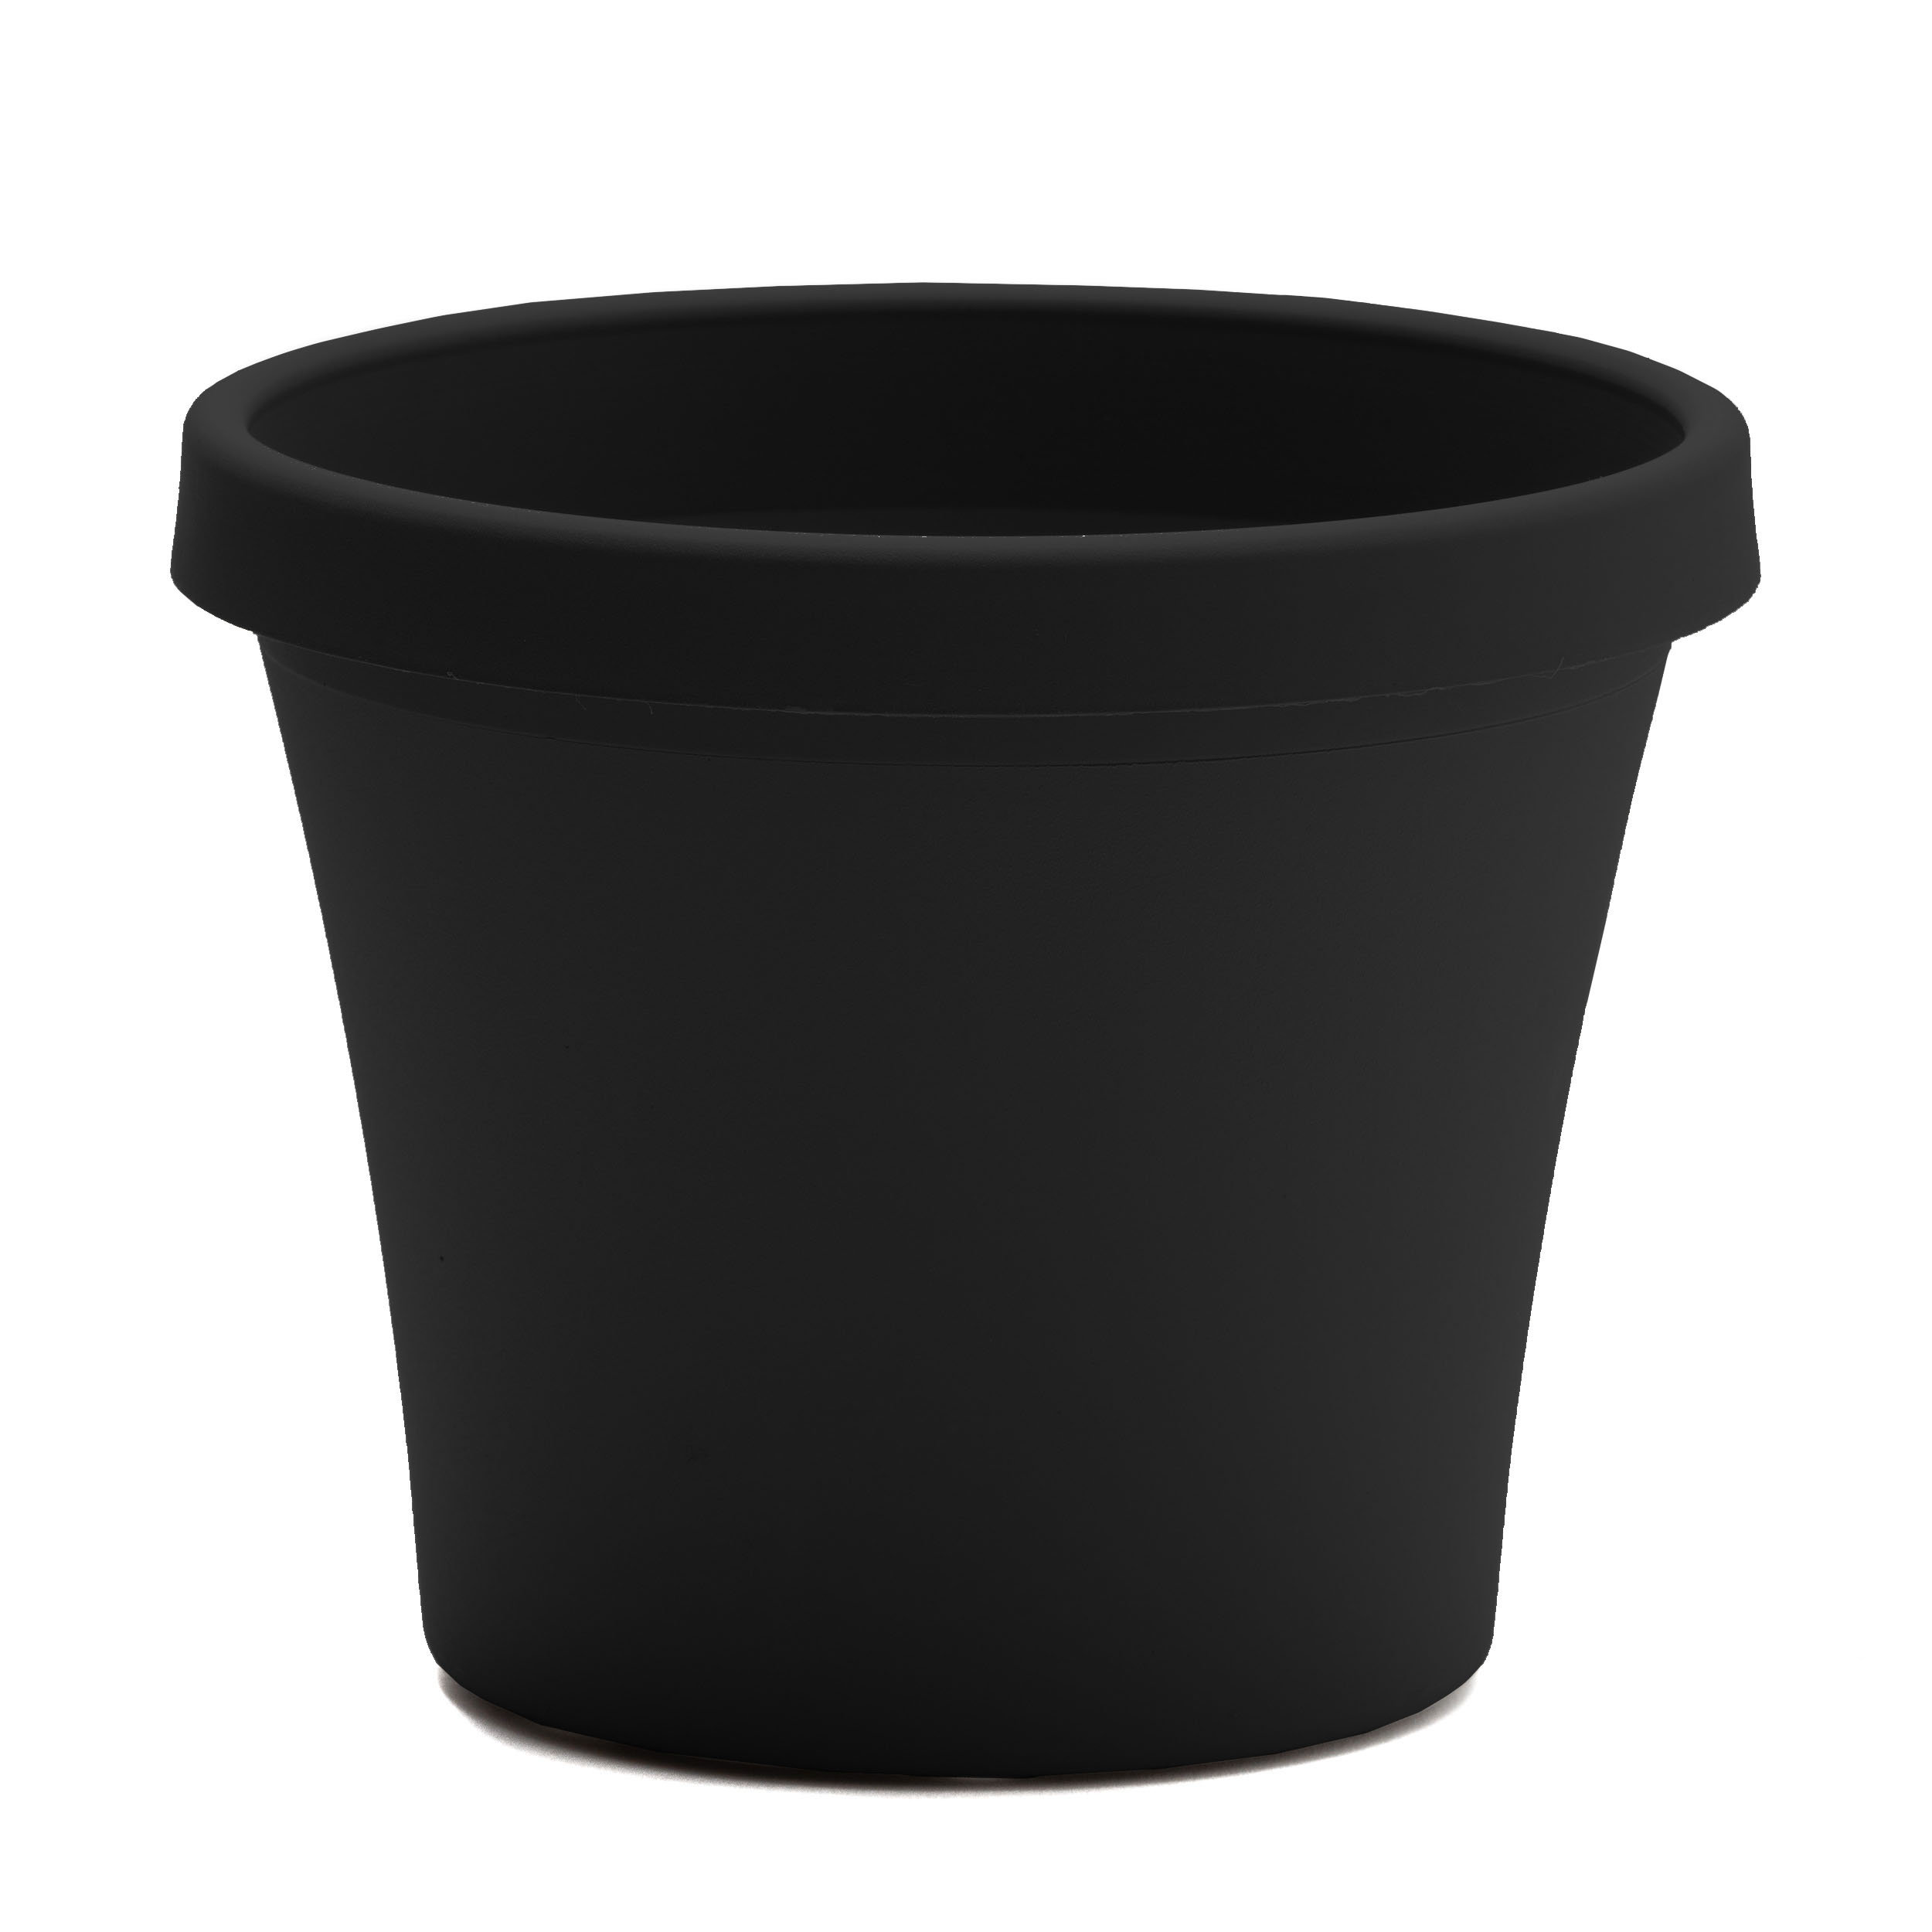 Eugenia Plastic Pot Planter Winston Porter Size: 8.5 H x 10.75 W x 7.5 D, Color: Black